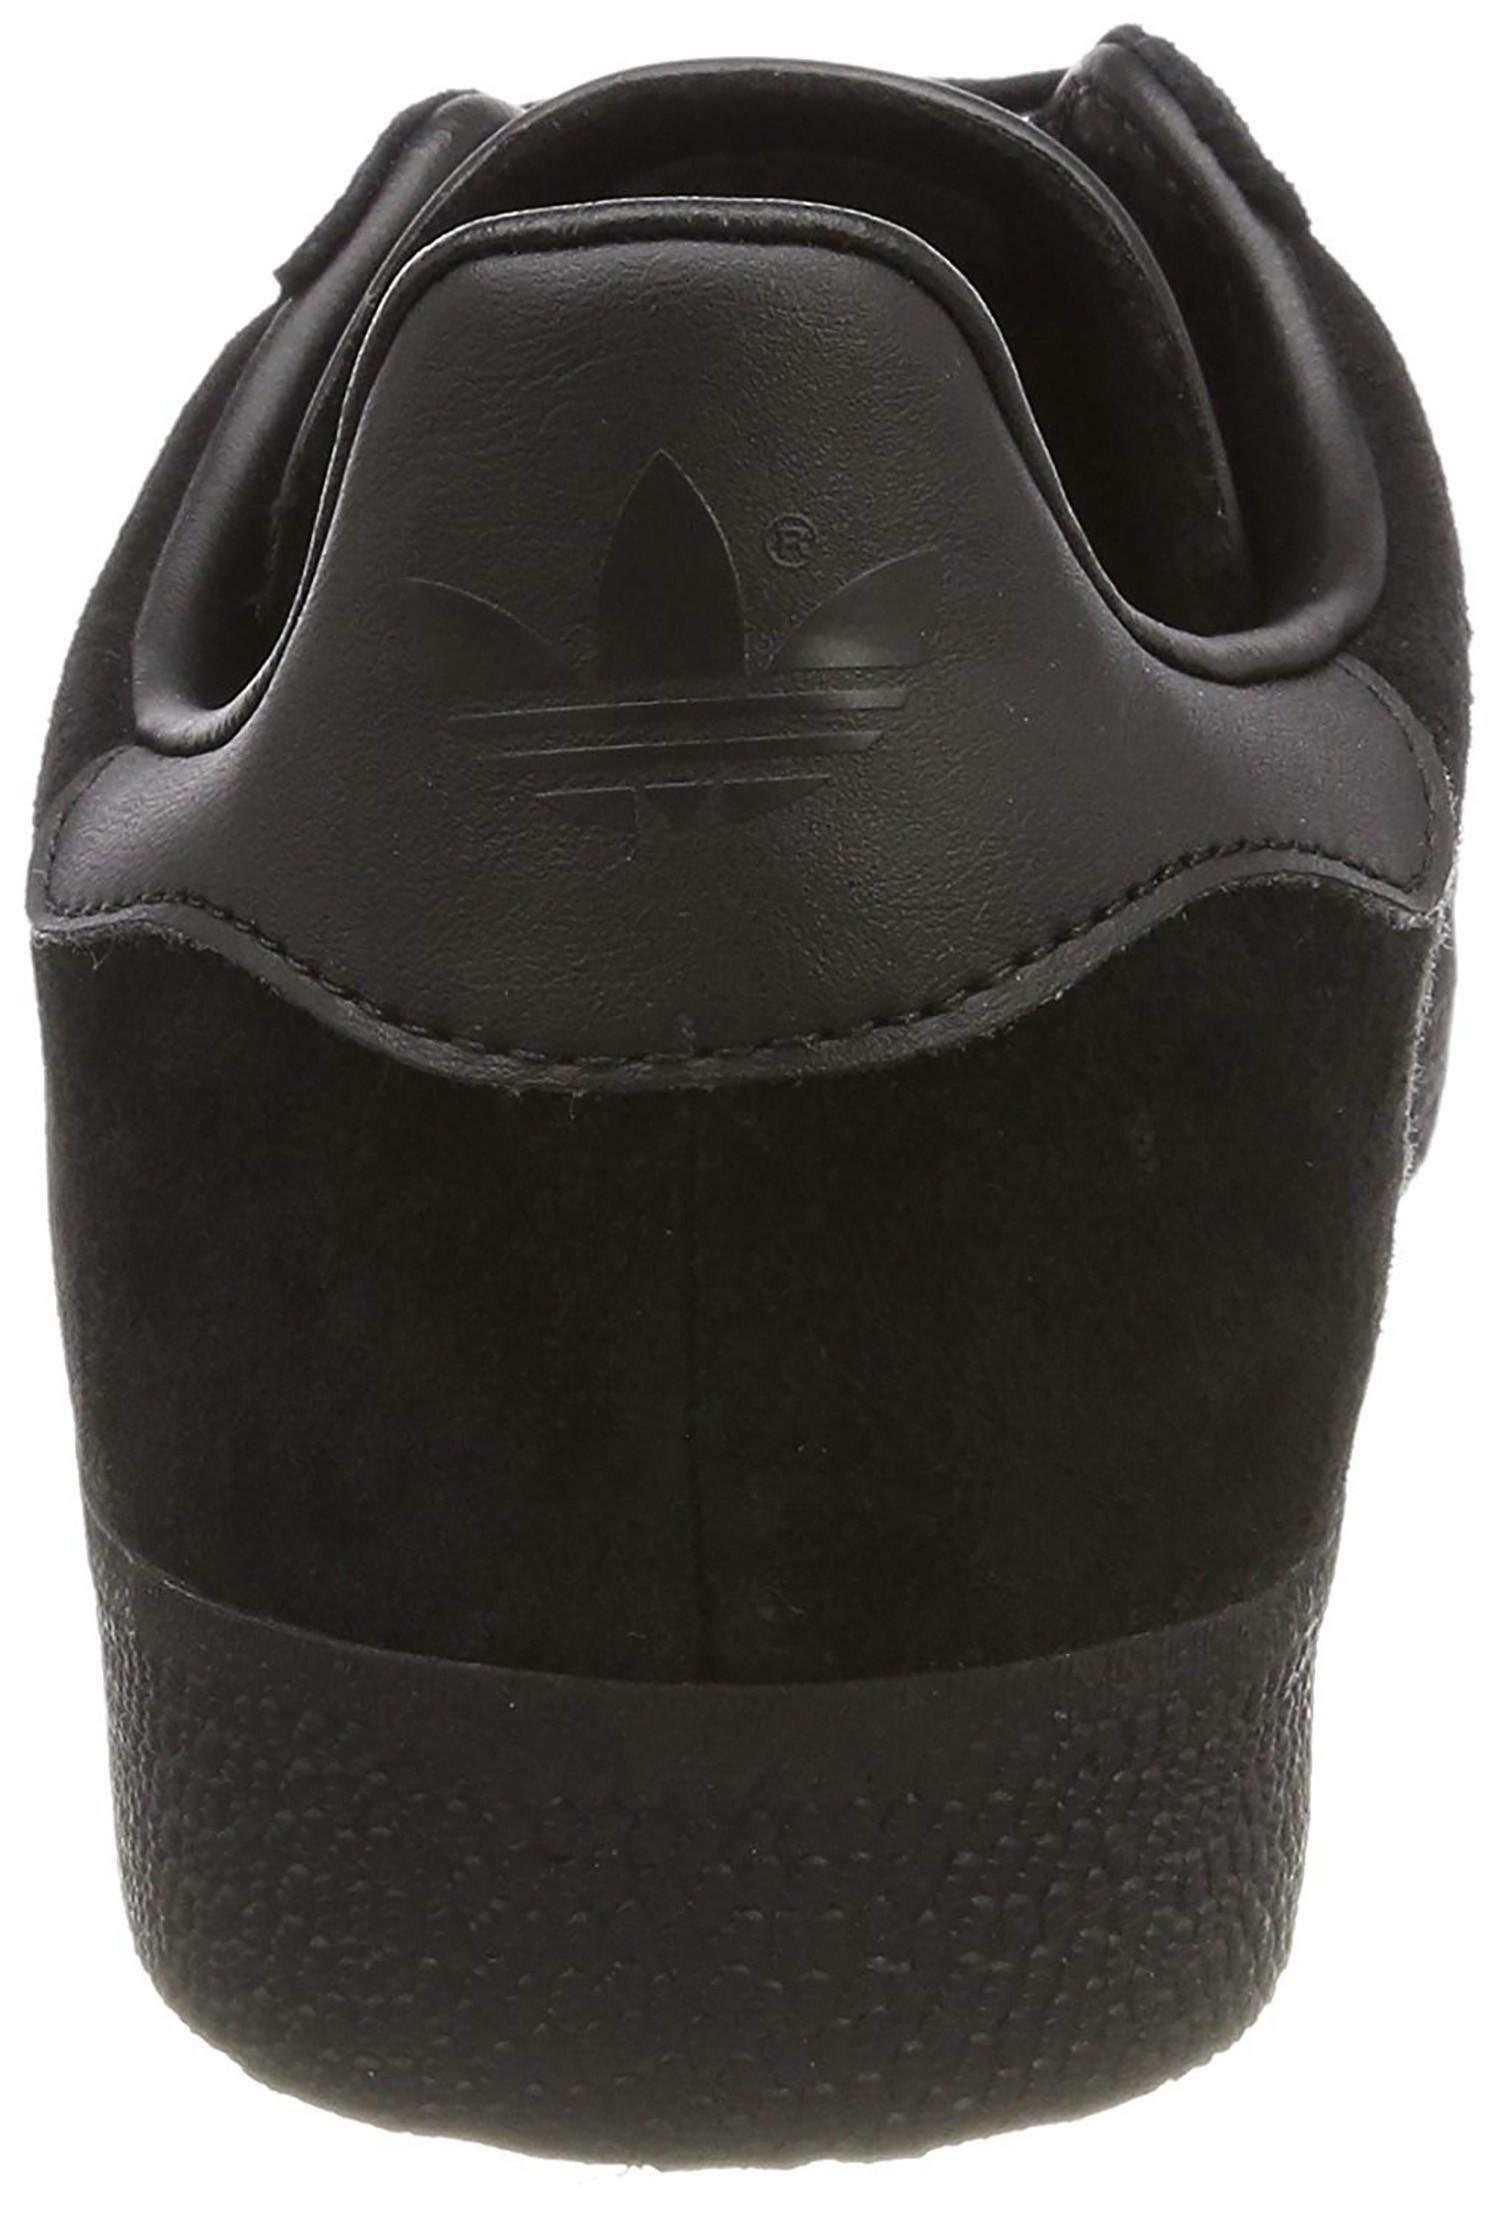 adidas adidas gazelle scarpe sportive uomo nere cq2809